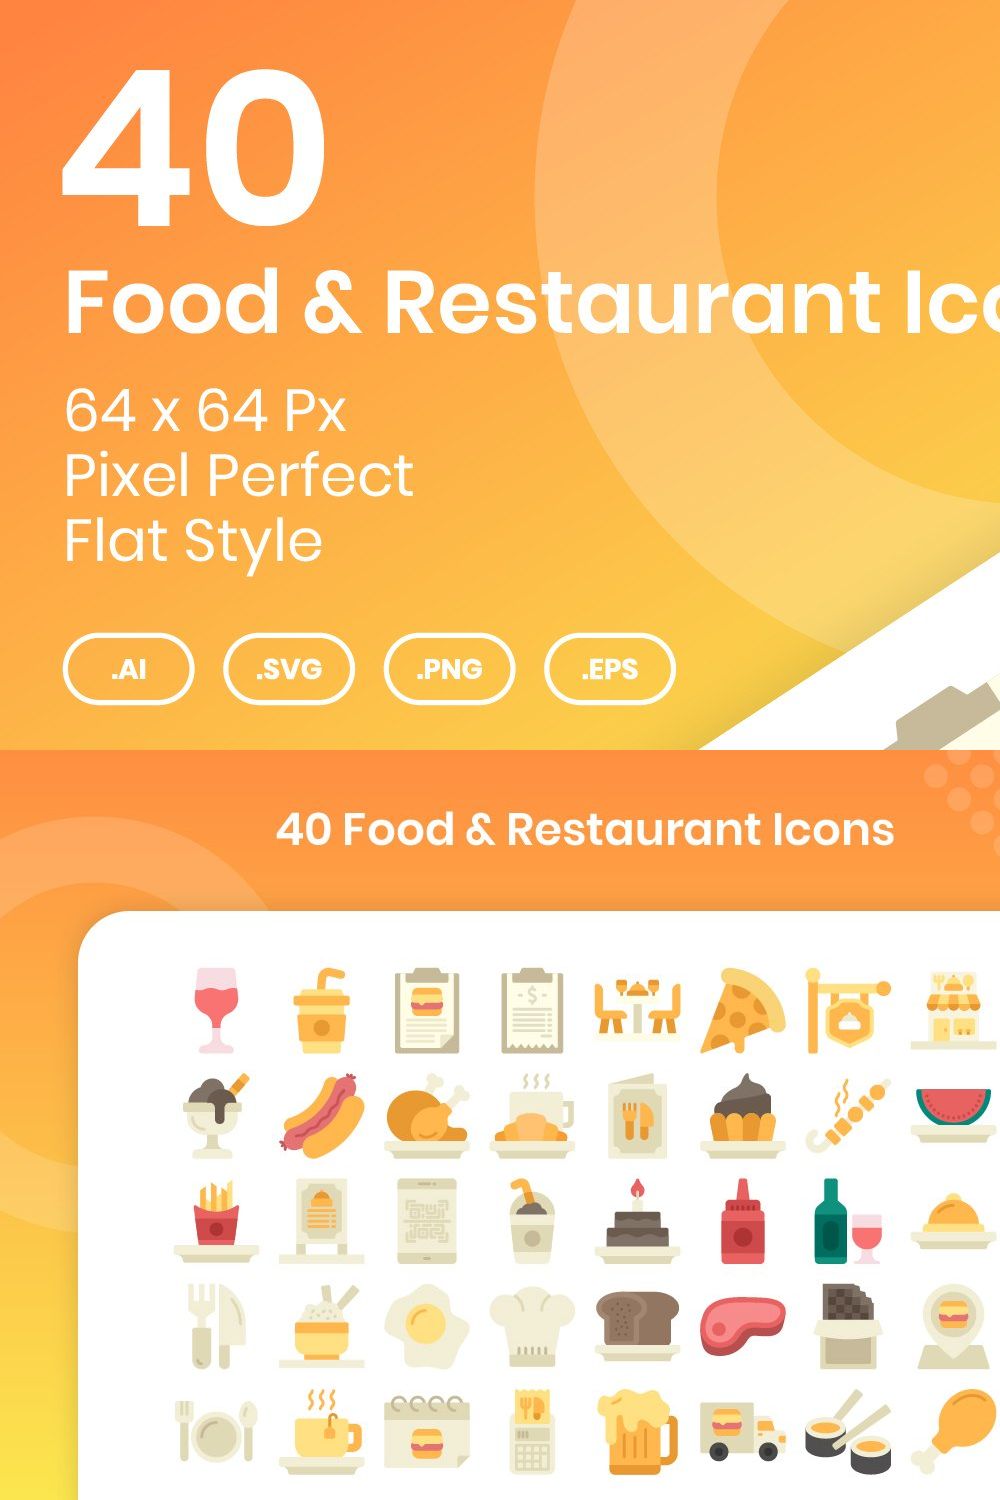 40 Food & Restaurant - Flat pinterest preview image.